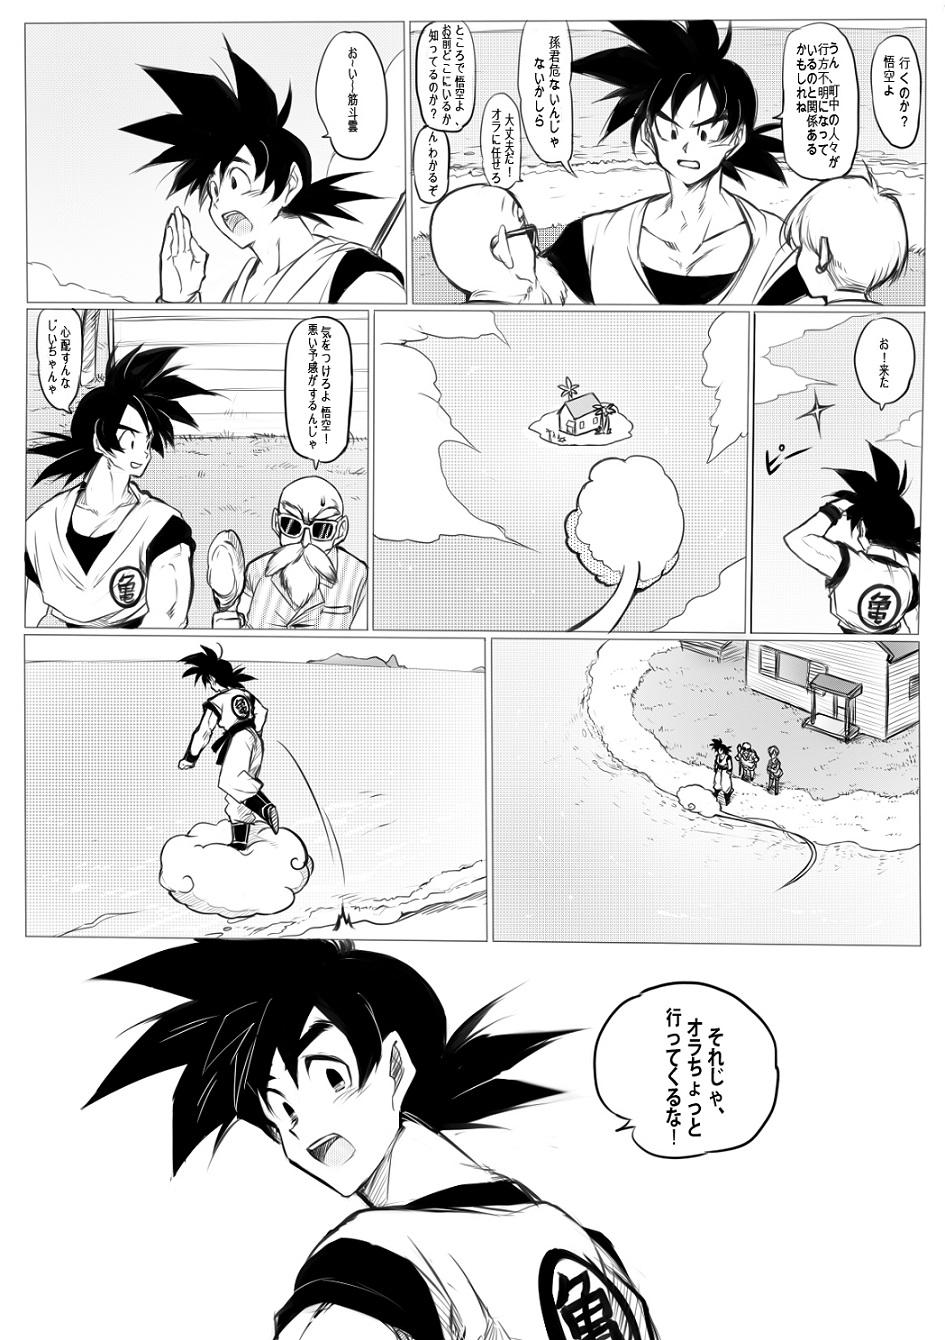 Glam 接触 - Dragon ball z Female - Page 2